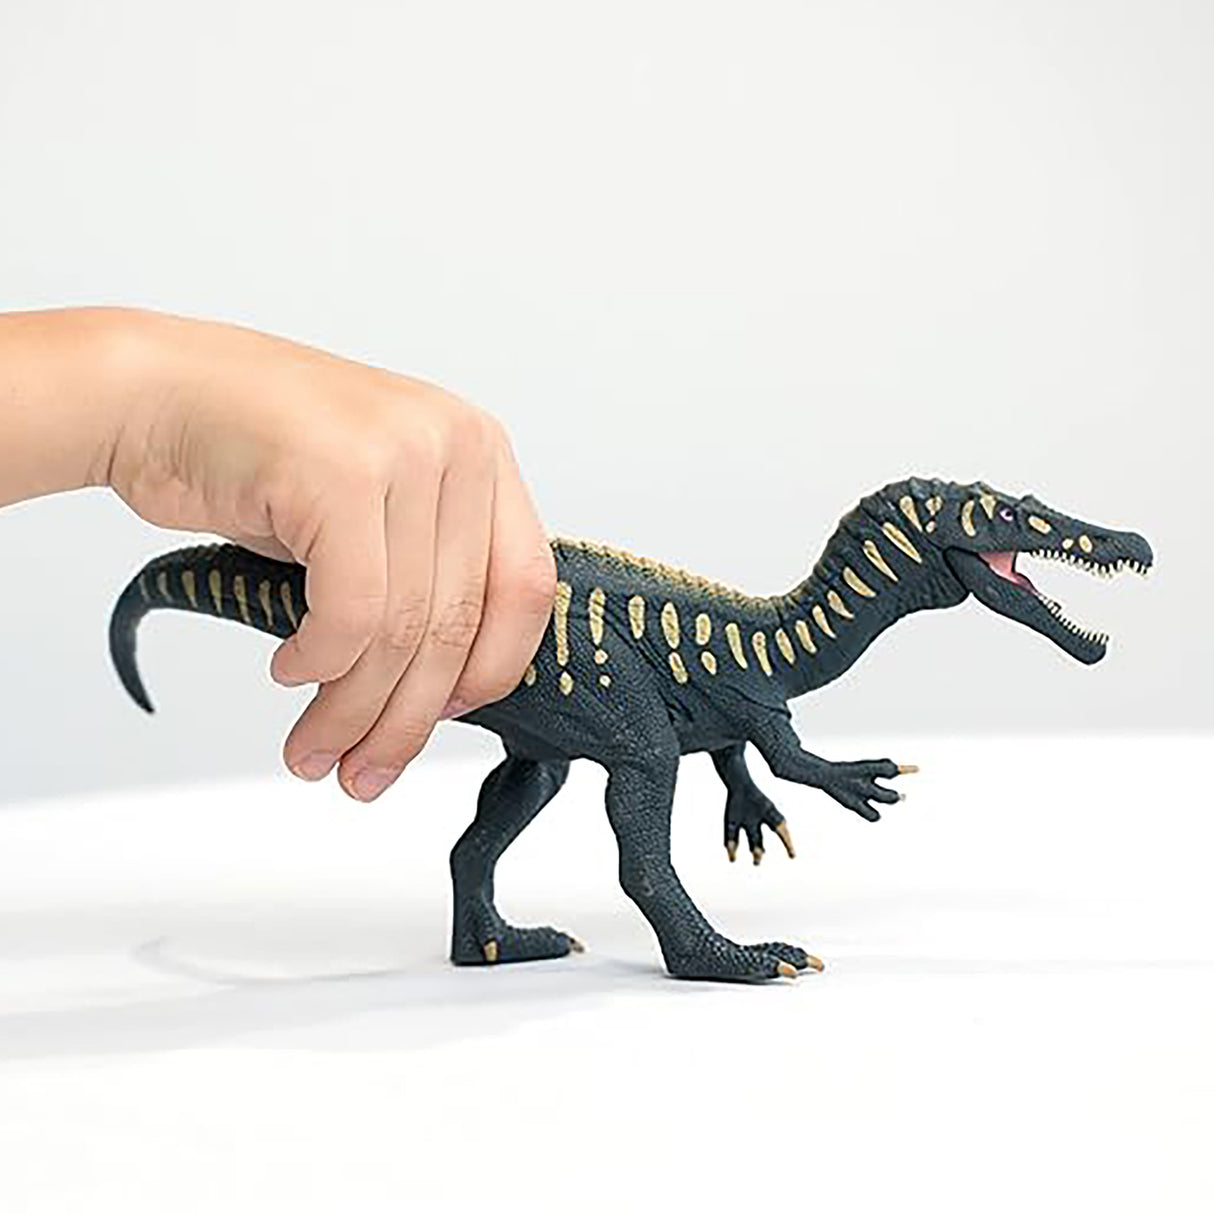 Schleich Dinosaur Figure - Baryonyx